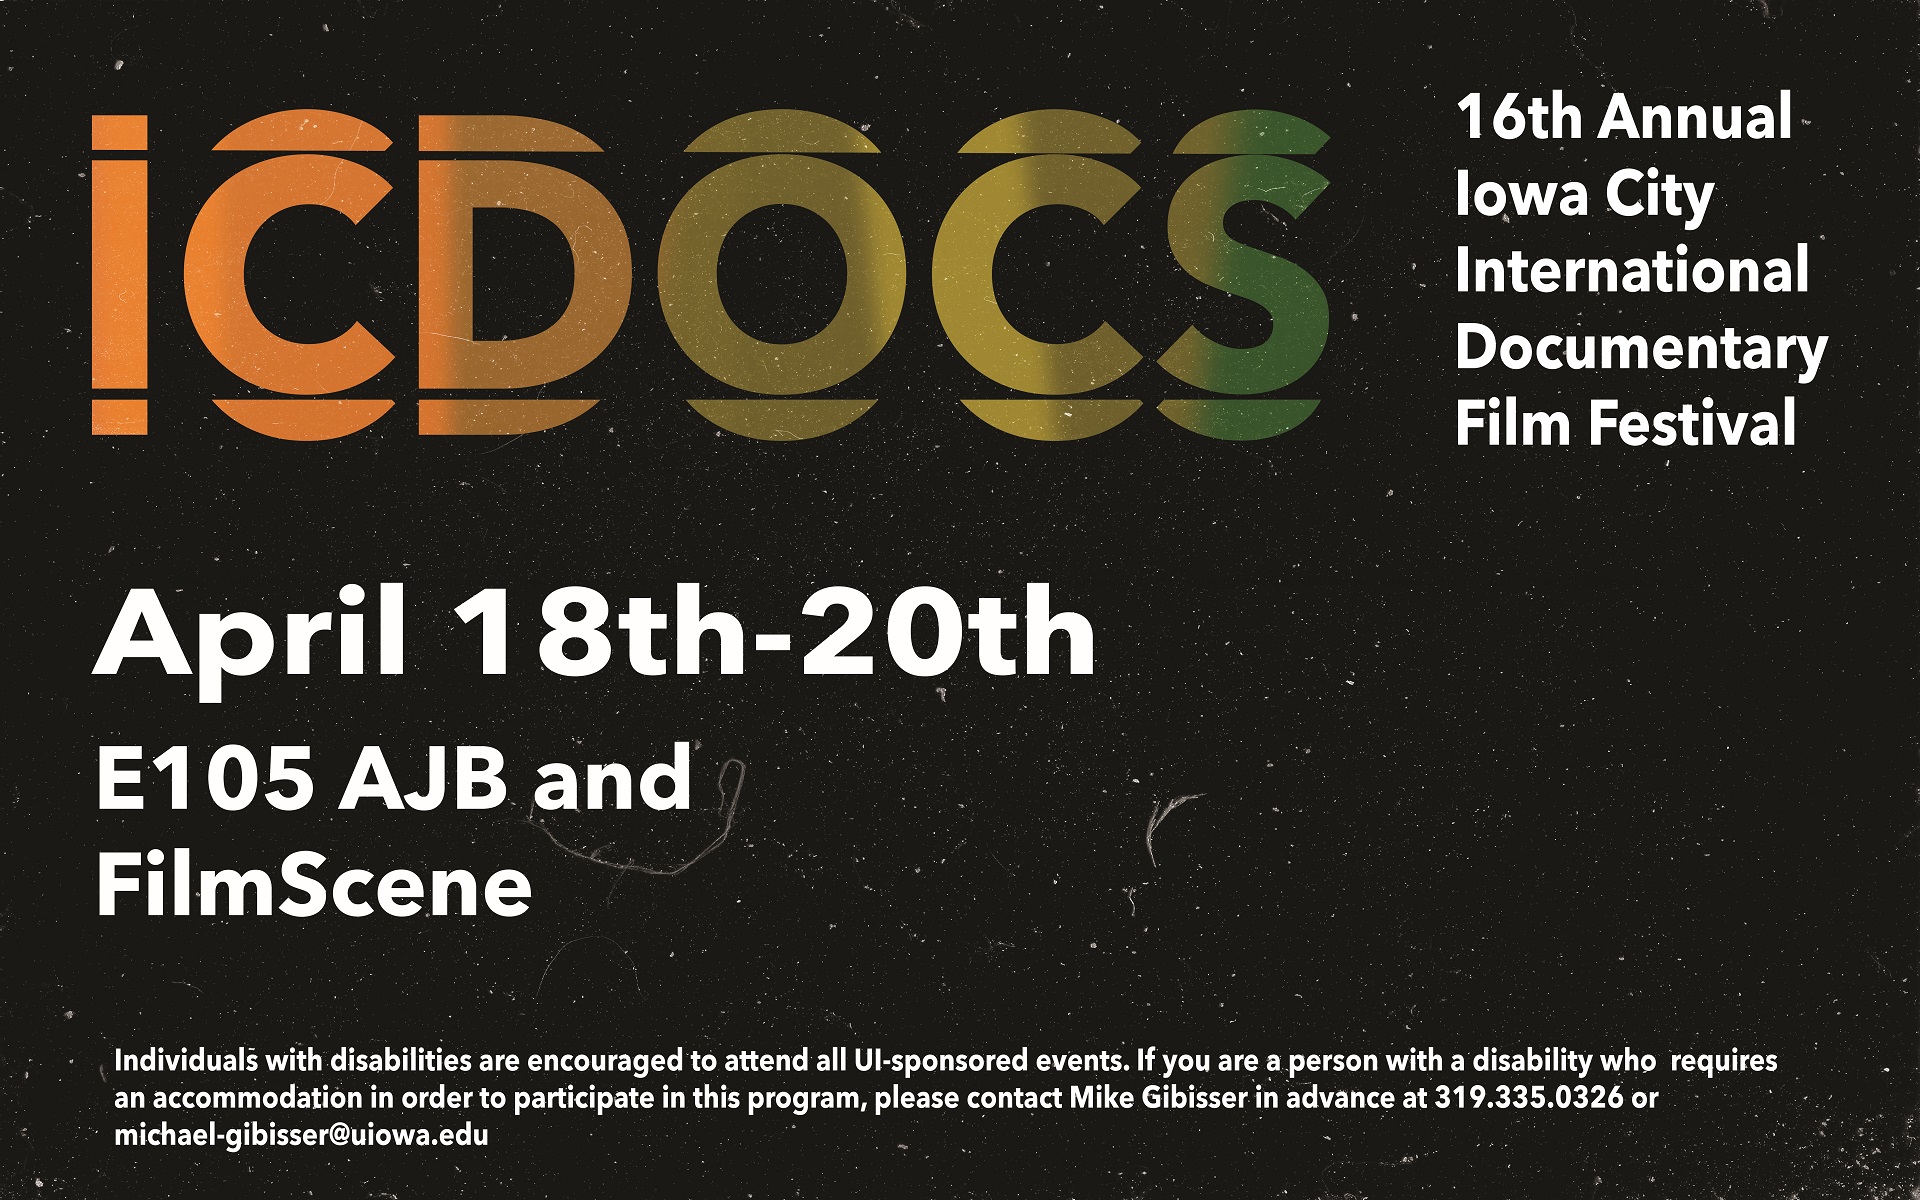 16th Annual Iowa City International Documentary Film Festival - April 18th-20th, E105 AJB and FilmScene